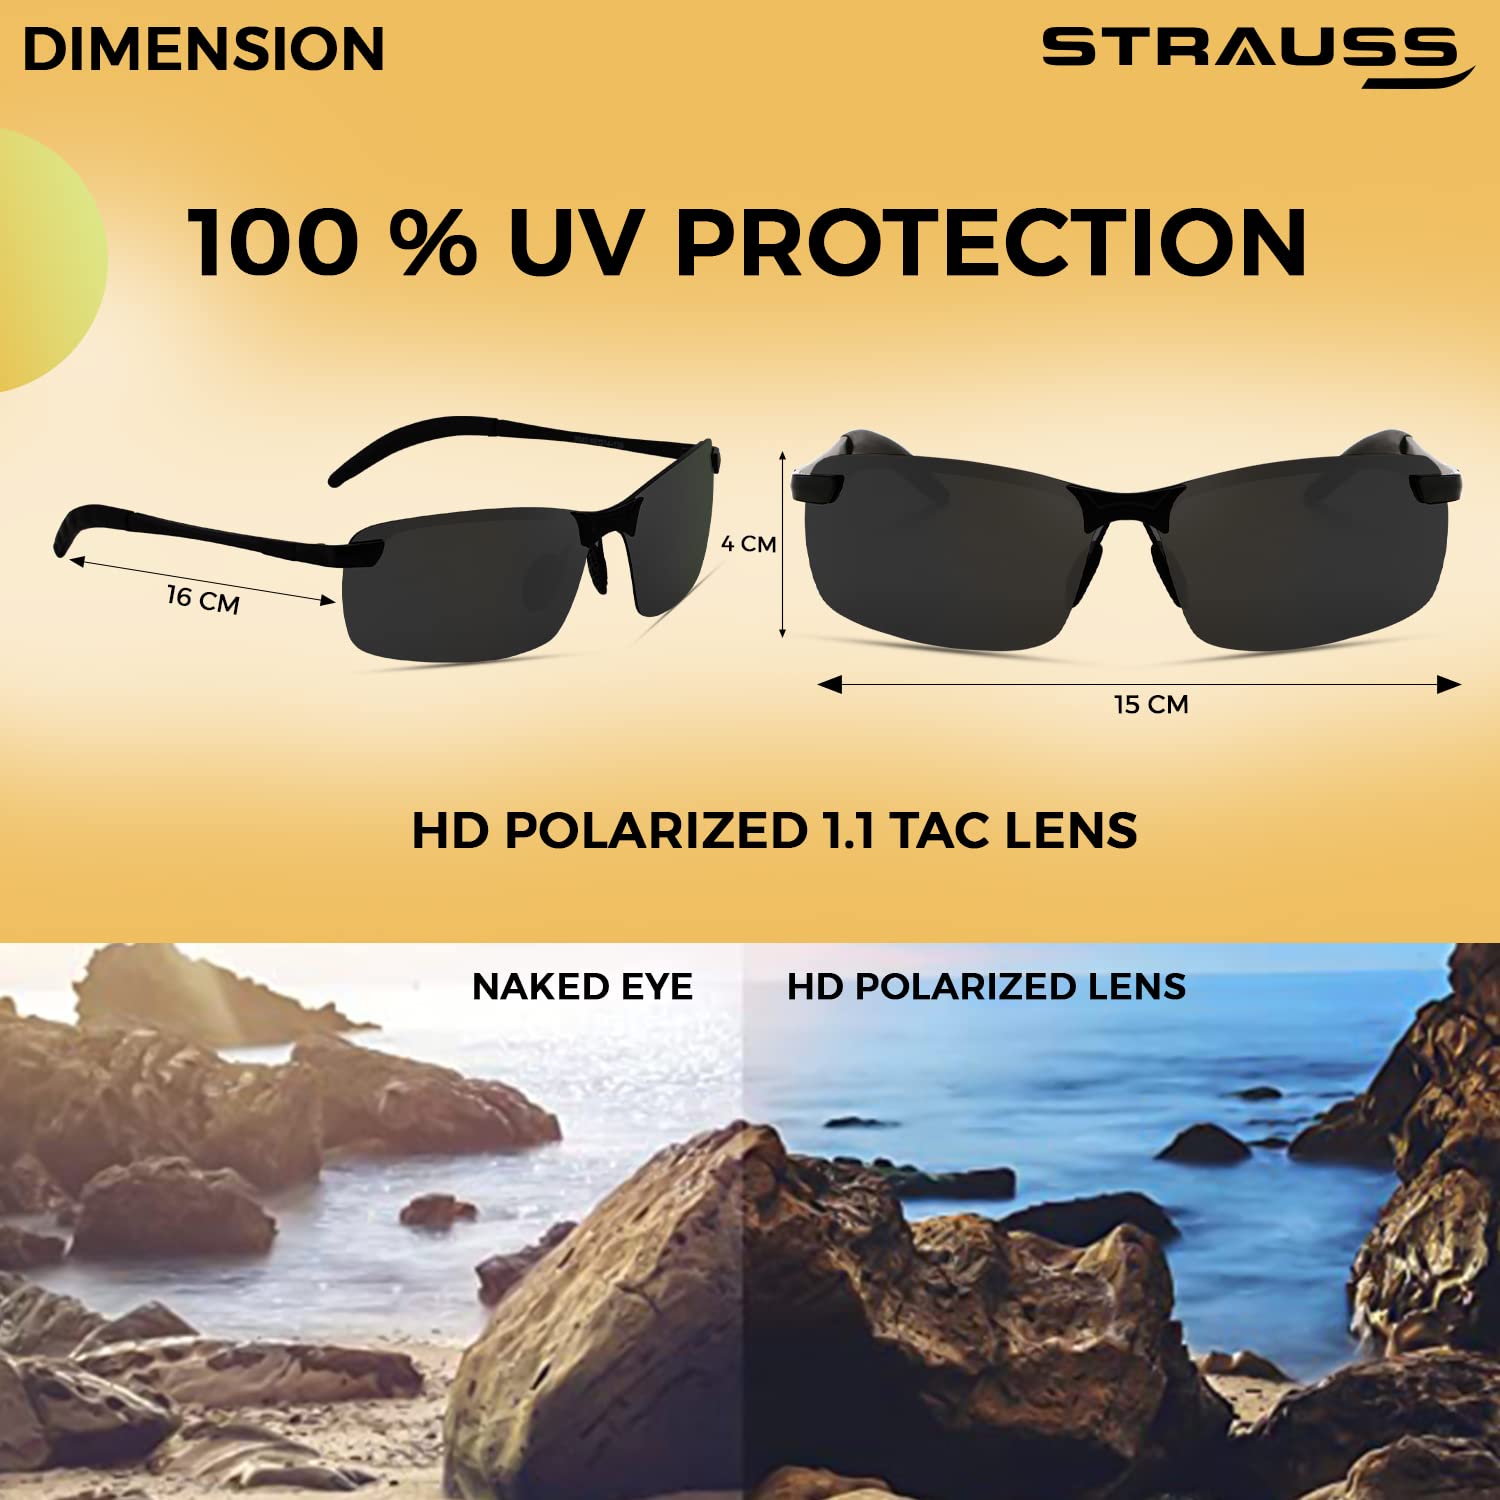 STRAUSS UV 400 Sunglasses, (Black)